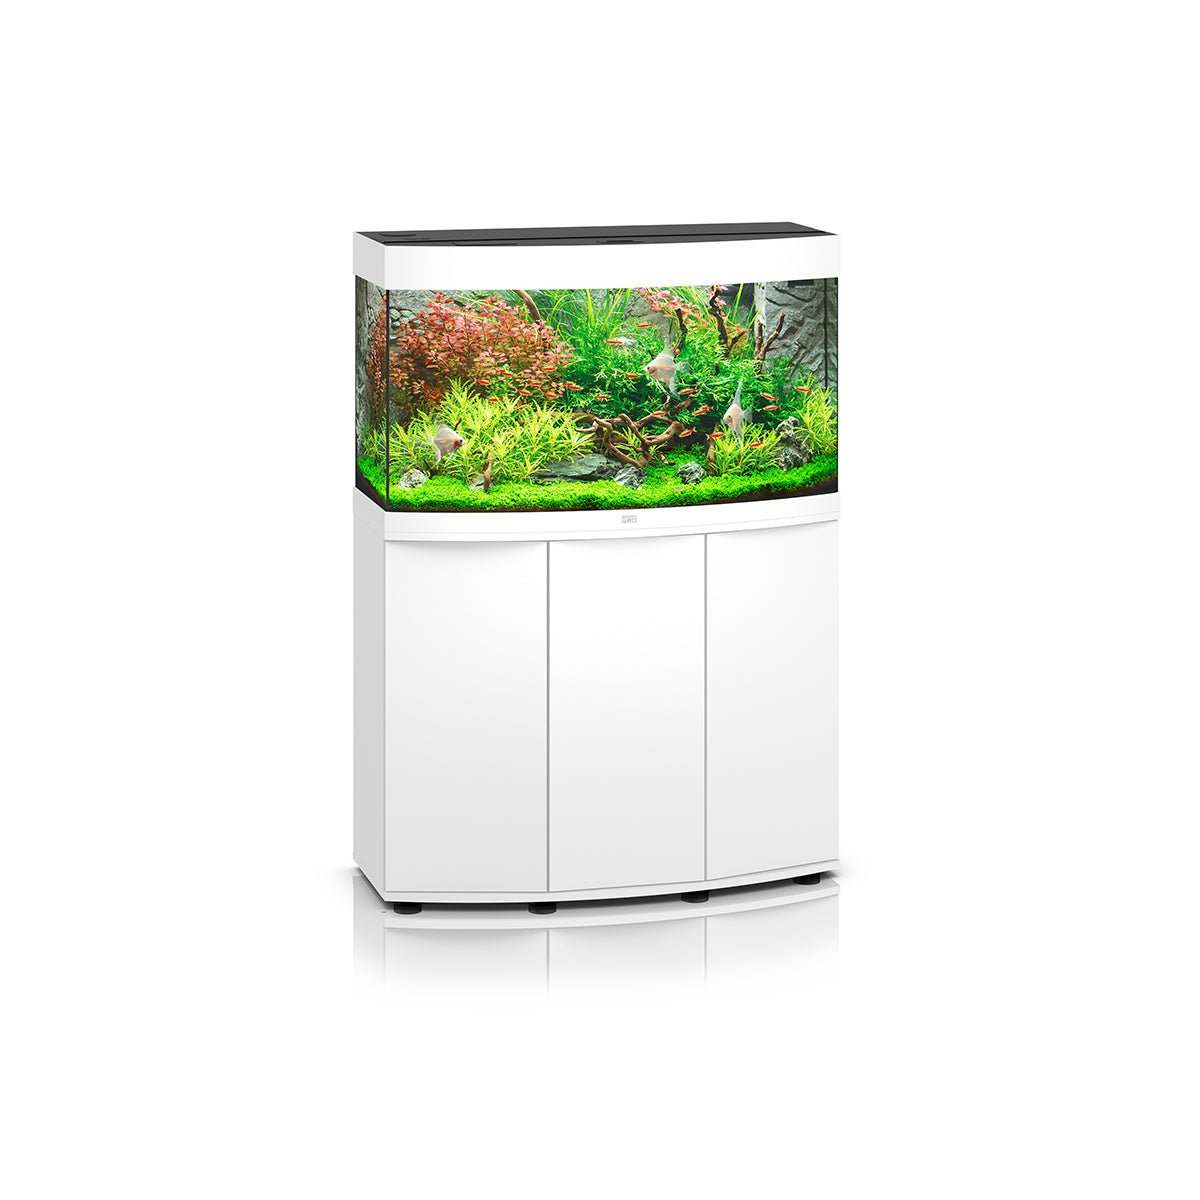 Juwel Vision 180 LED Aquarium and Cabinet (White) - Charterhouse Aquatics